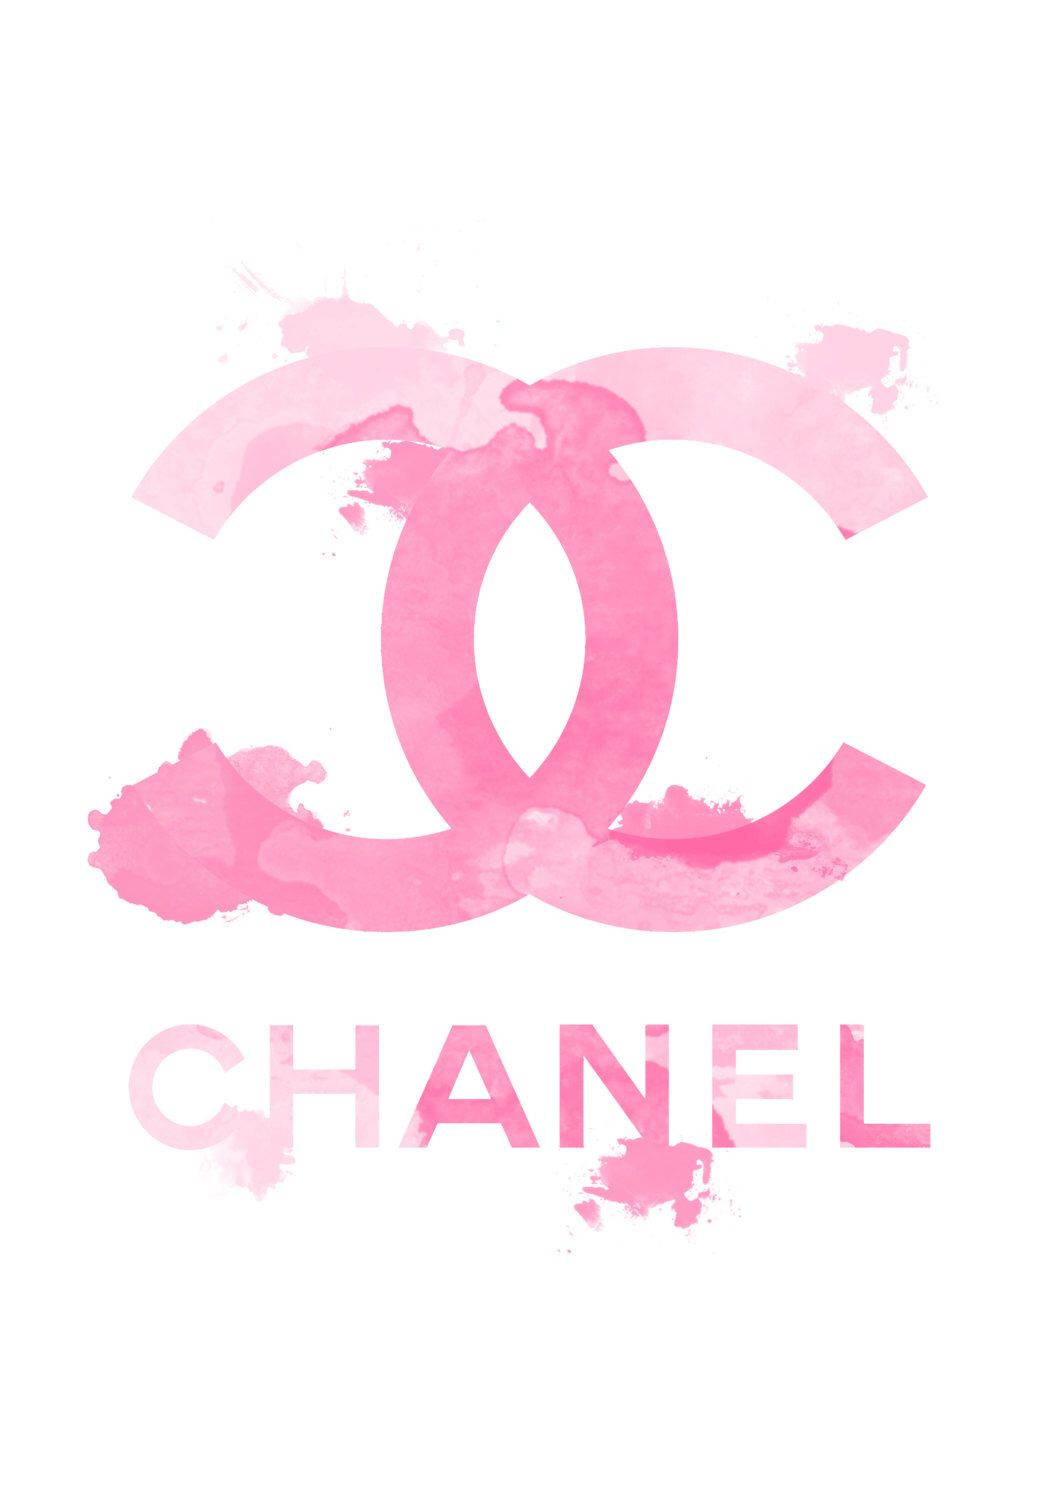 CHANELlogo  Tumblr  Chanel wall art Coco chanel wallpaper Pretty  wallpaper iphone